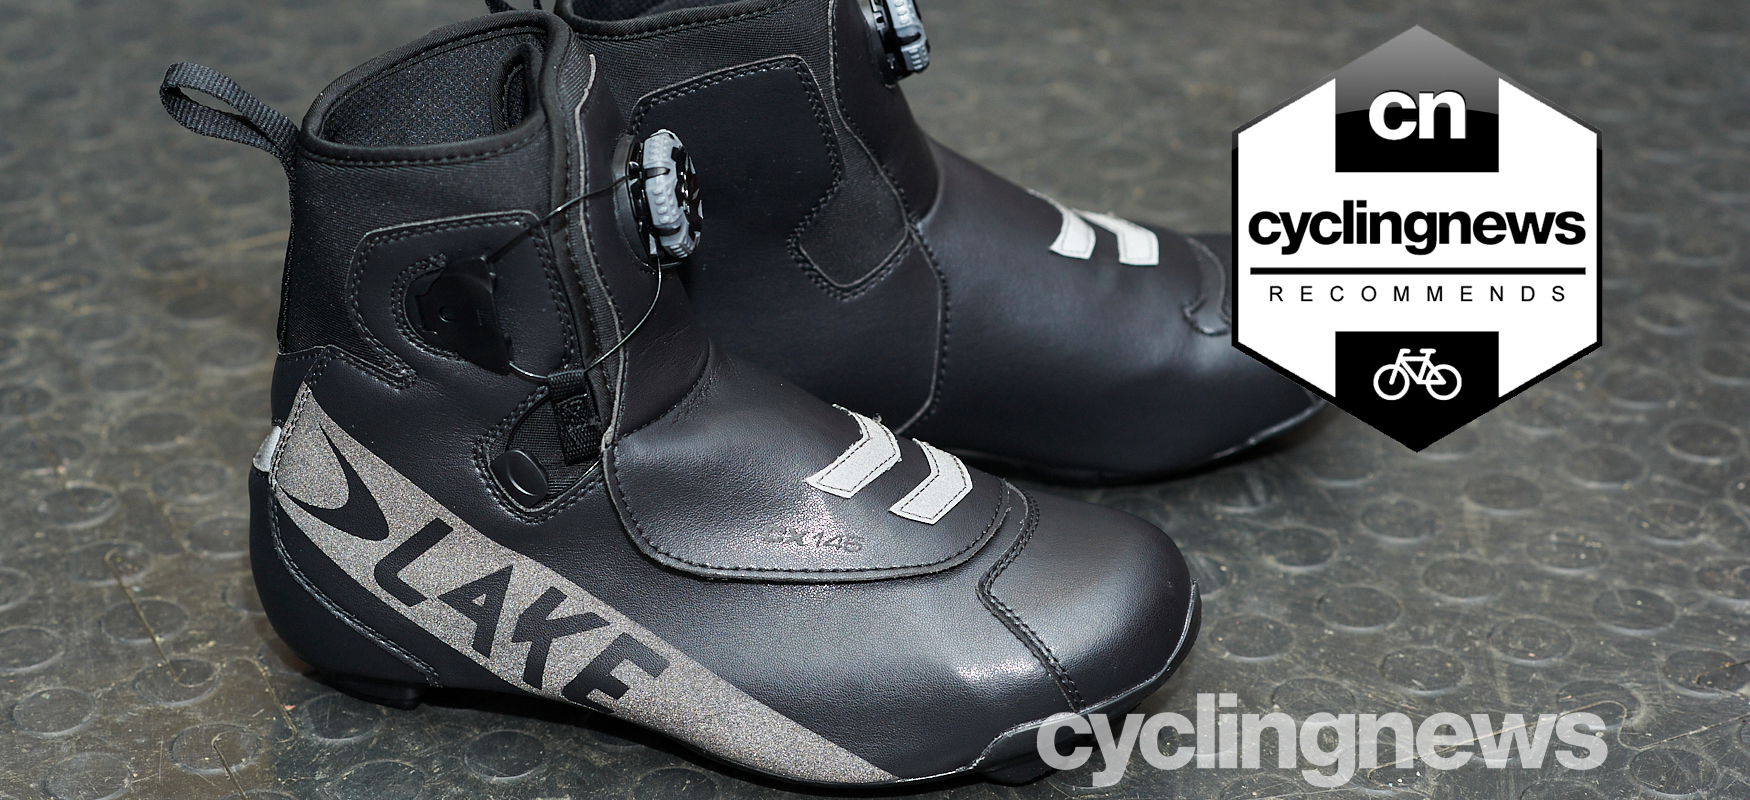 Lake Winter cycling boots review | Cyclingnews